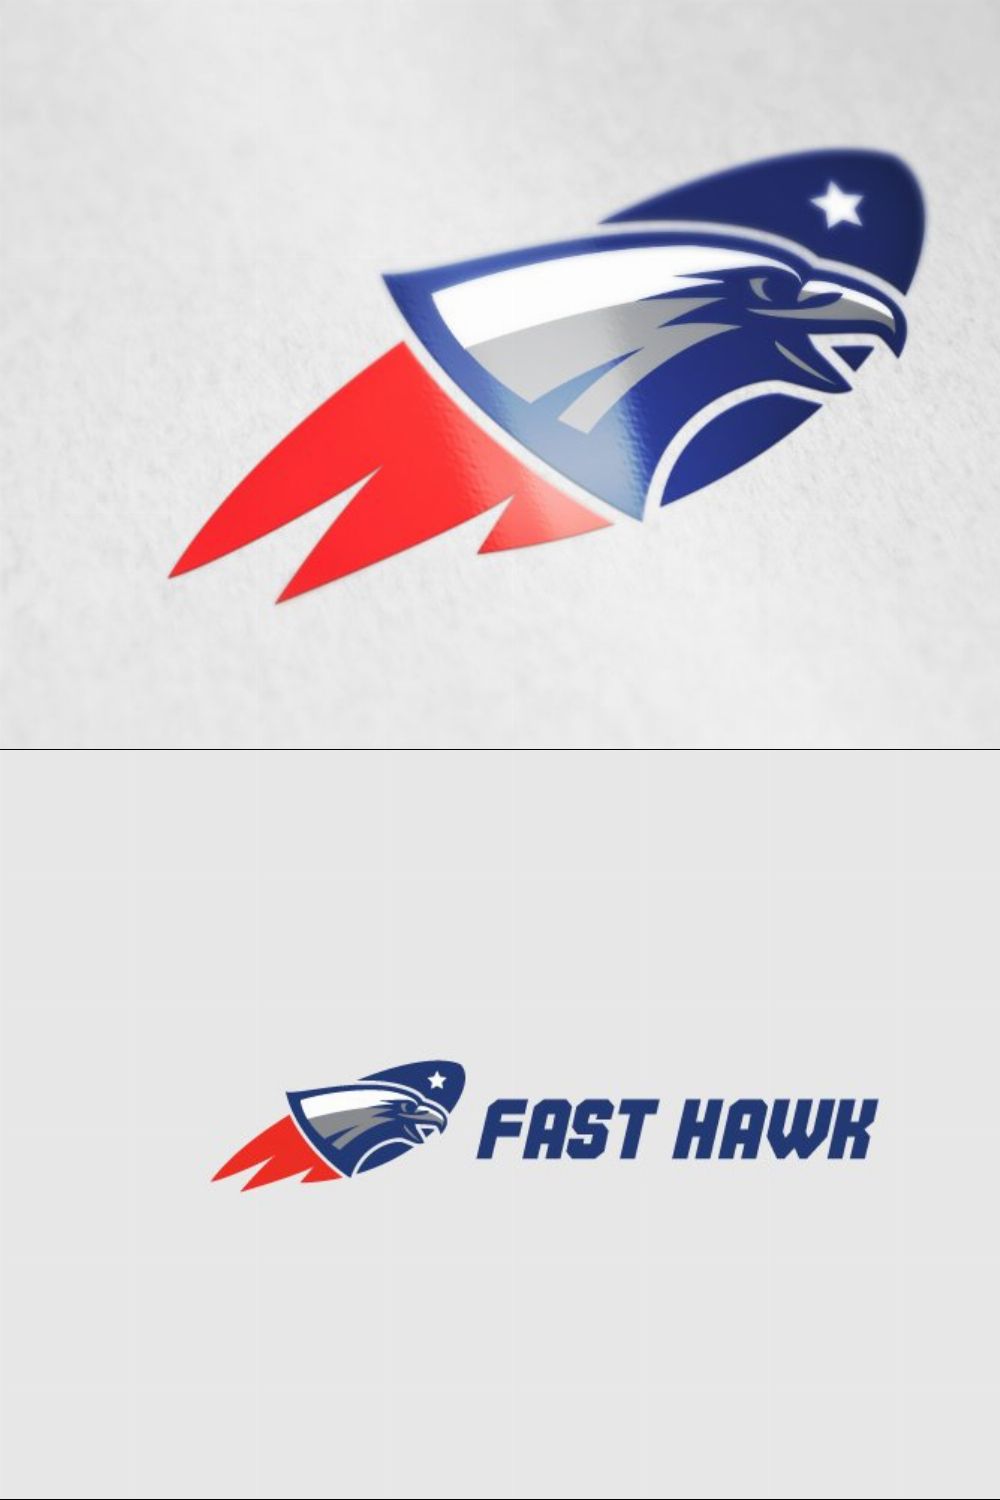 Falcon logo pinterest preview image.